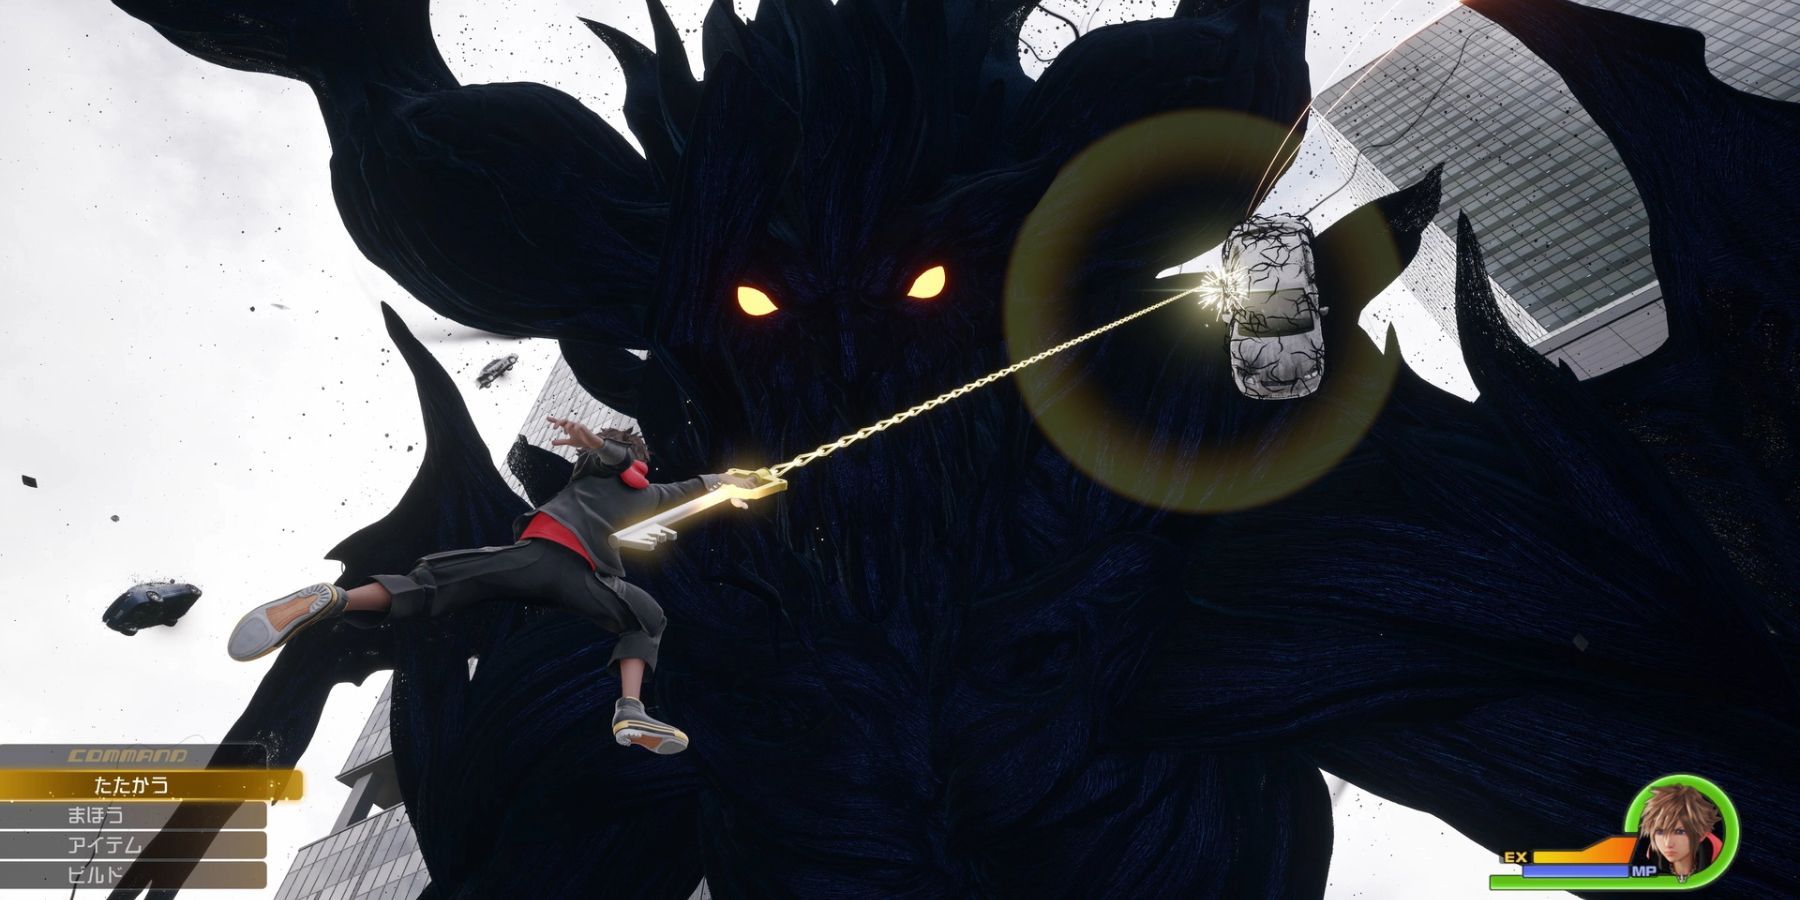 Kingdom Hearts 4 Trailer Analysis – The Story Arc